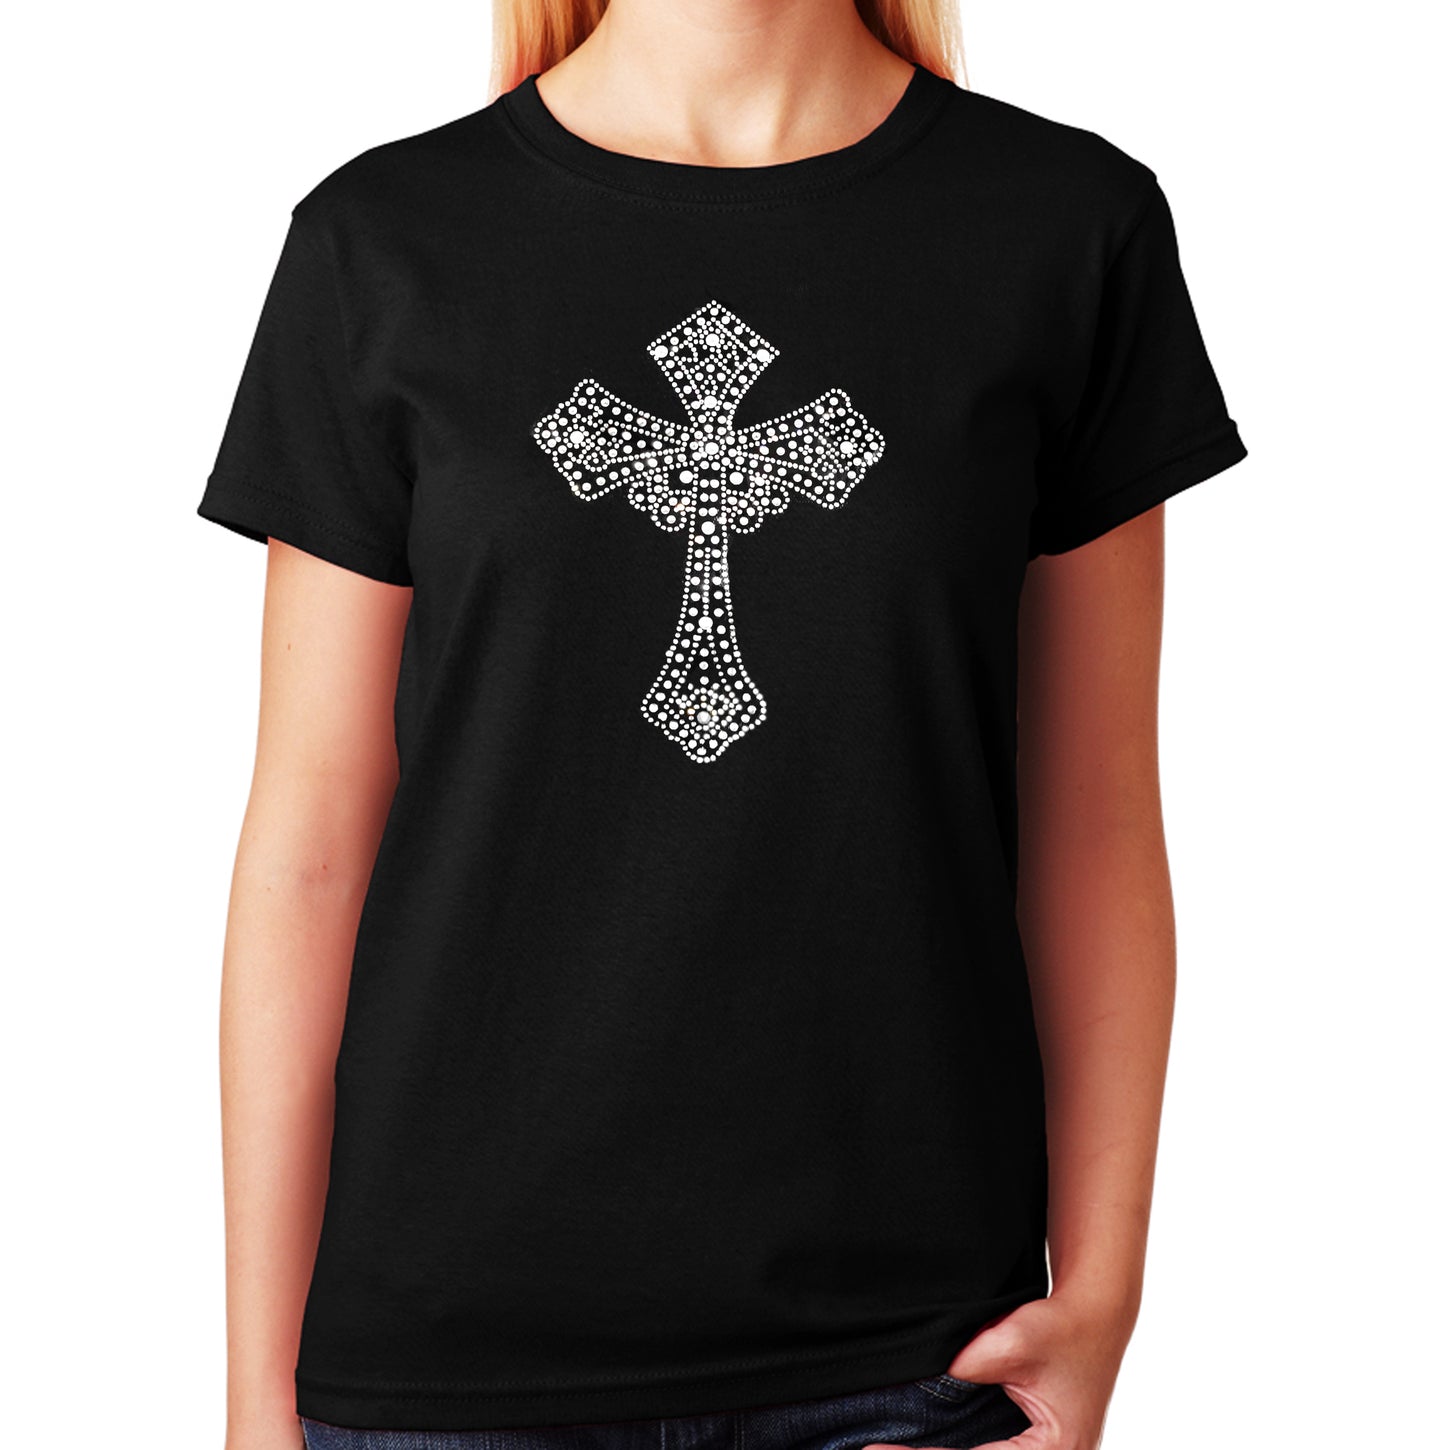 Women's / Unisex T-Shirt with Crystal Cross in Rhinestones